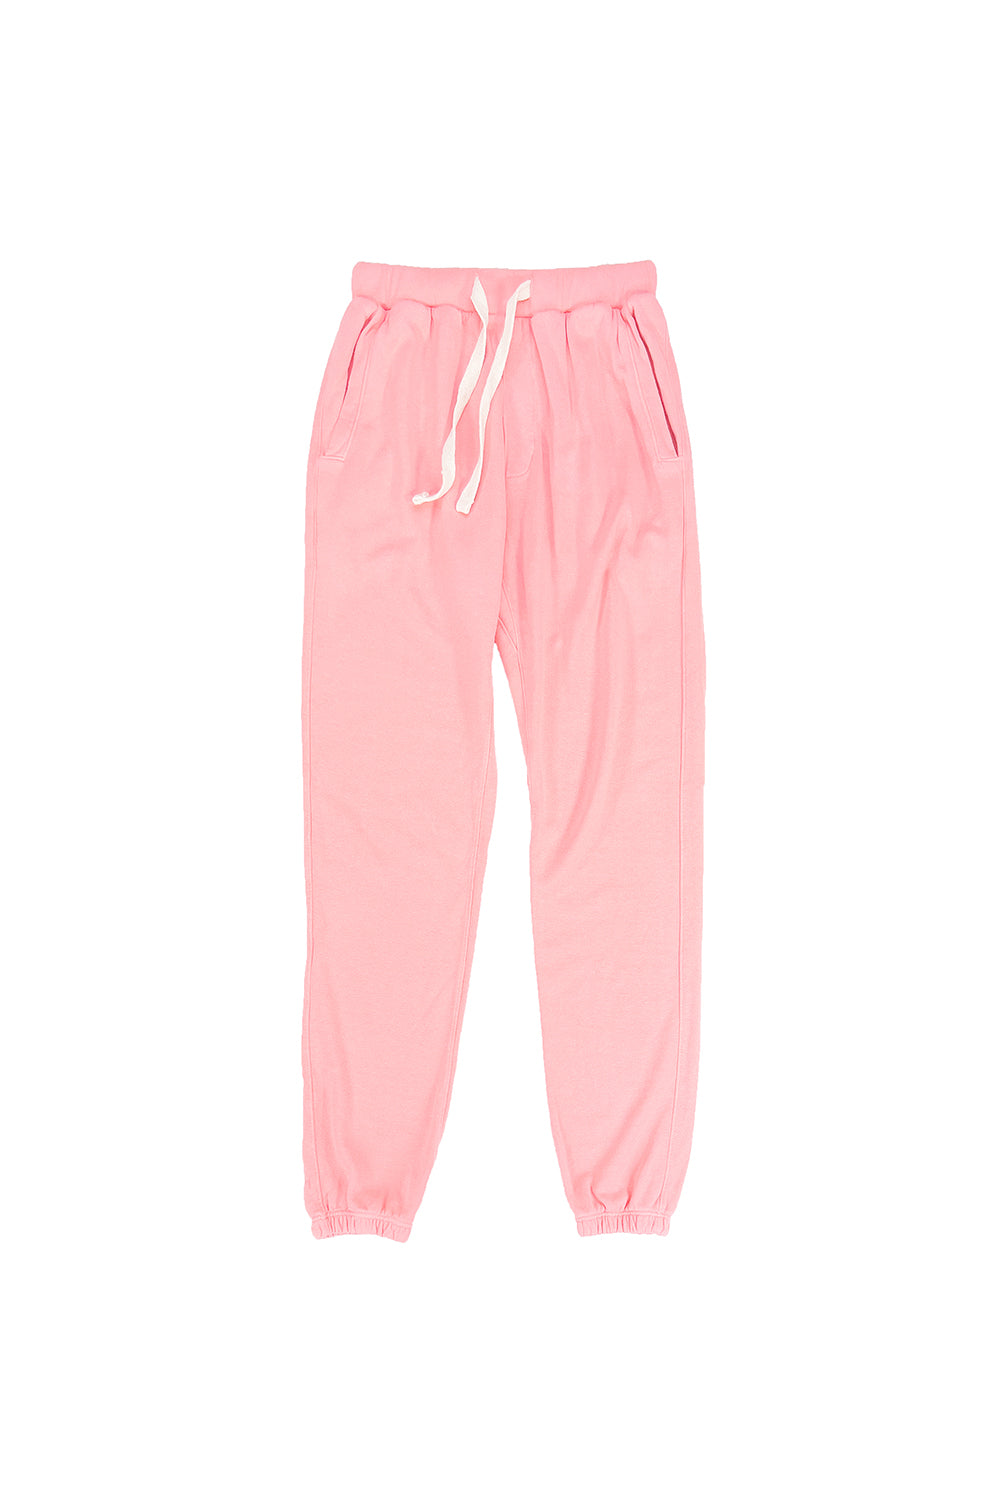 Yelapa Sweatpant | Jungmaven Hemp Clothing & Accessories / Color: Pink Salmon